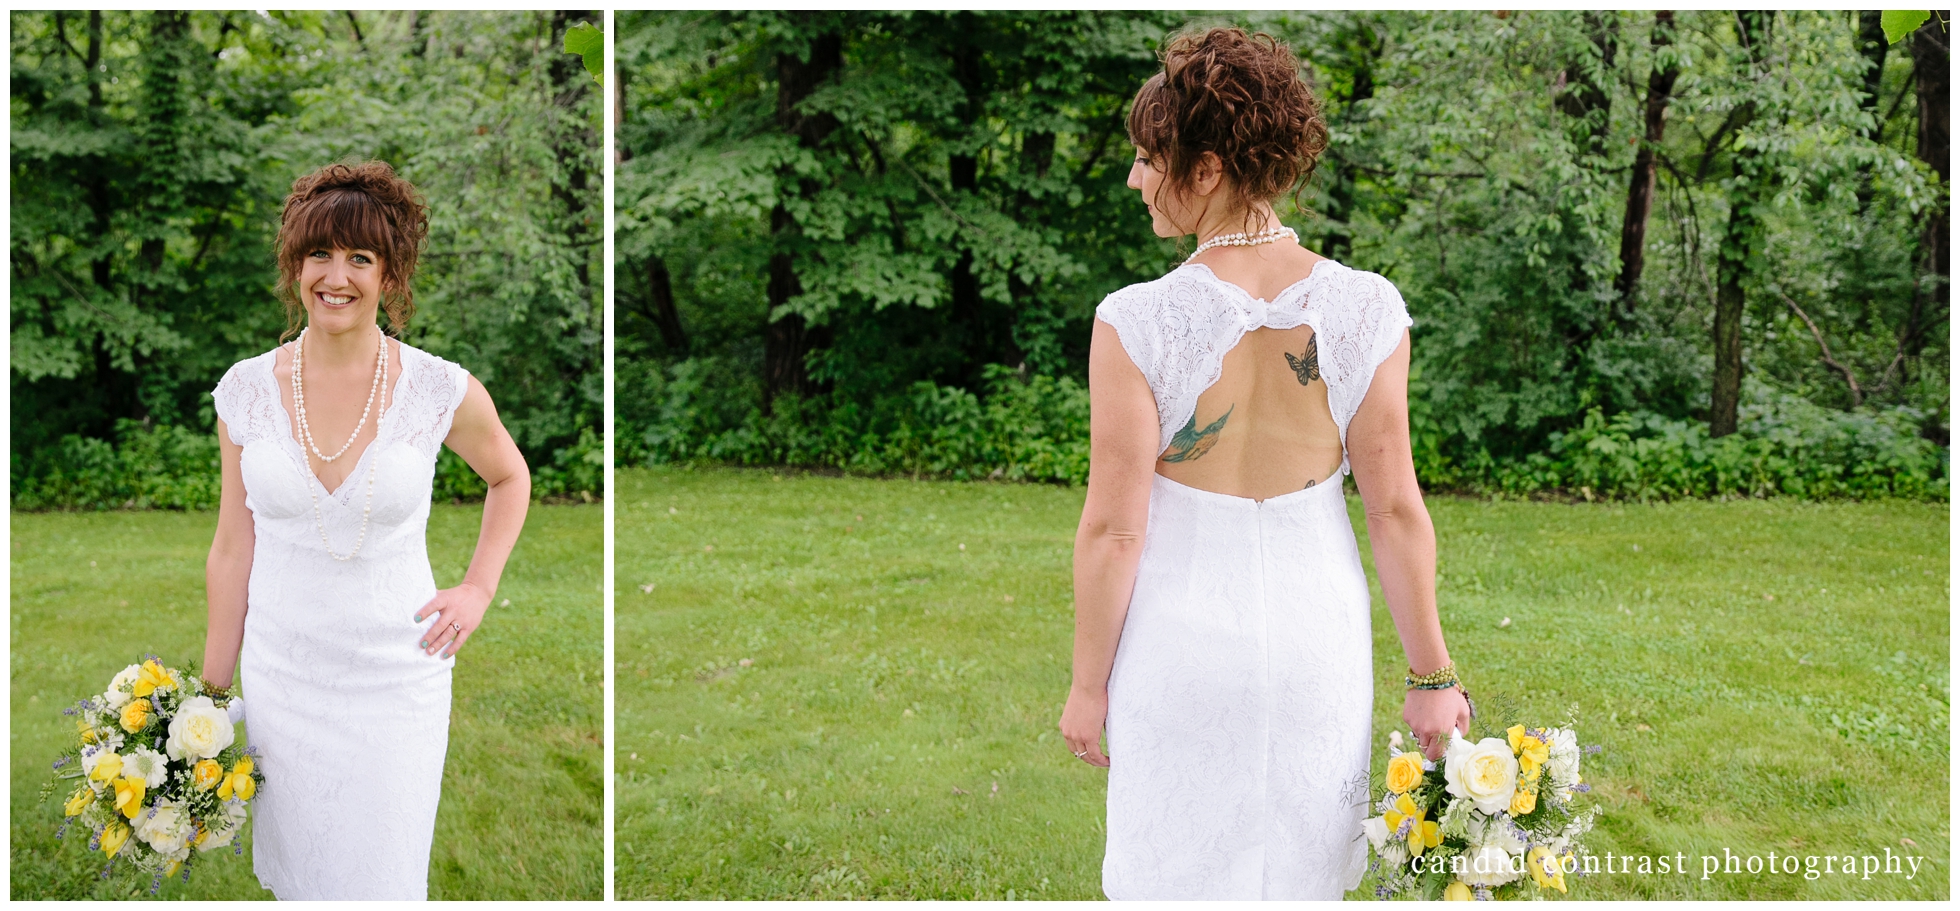 modern bridal portraits at backyard wedding in dubuque, ia, candid contrast photography